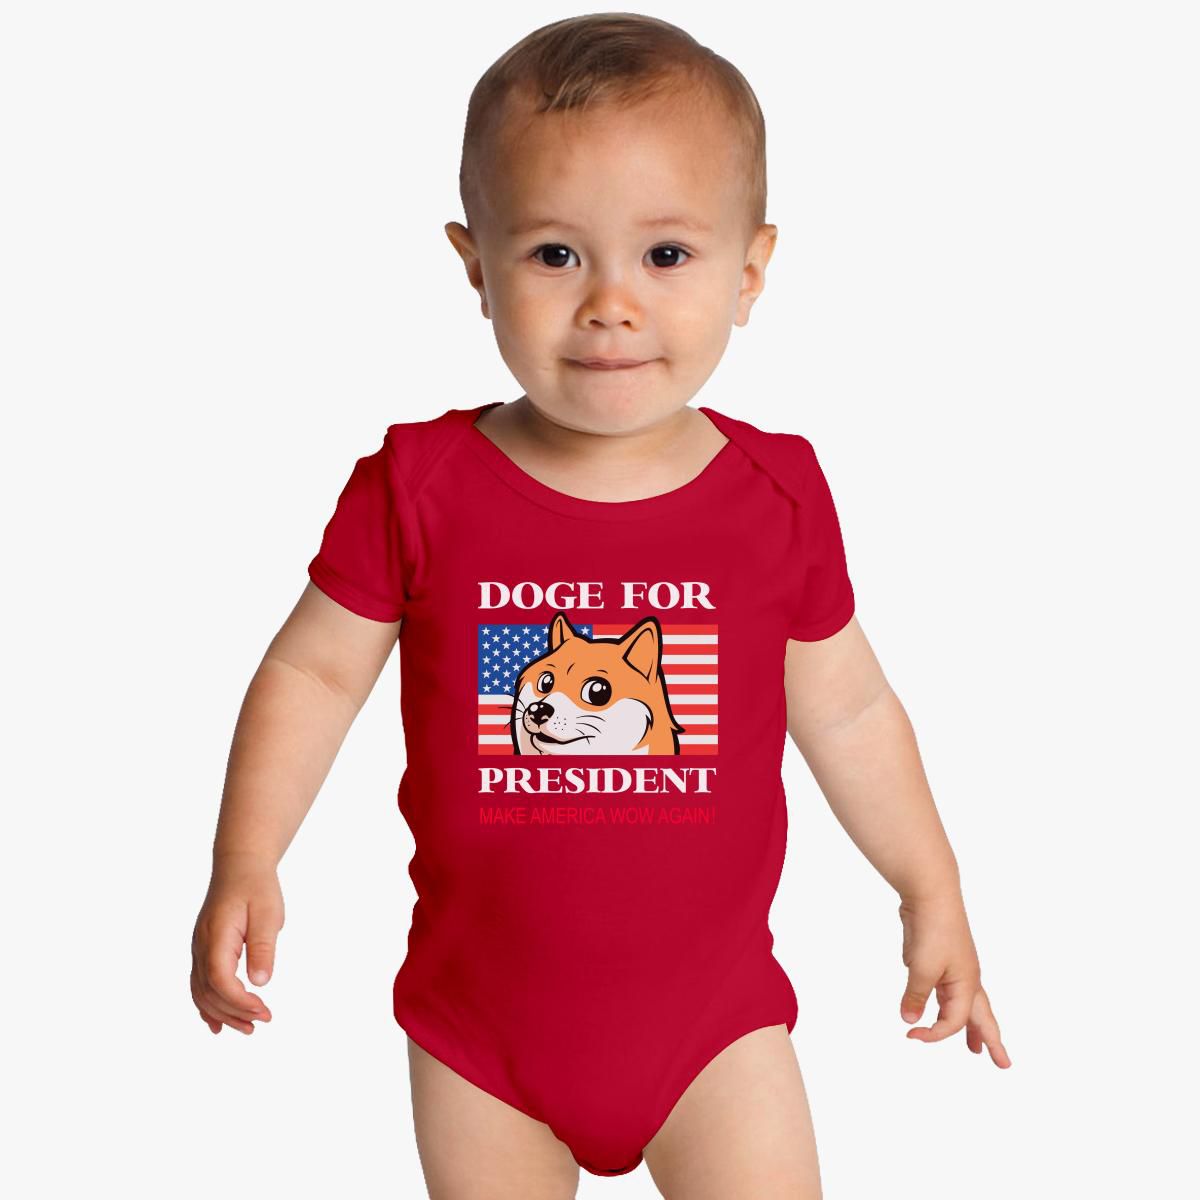 Doge For President Baby Onesies - Customon